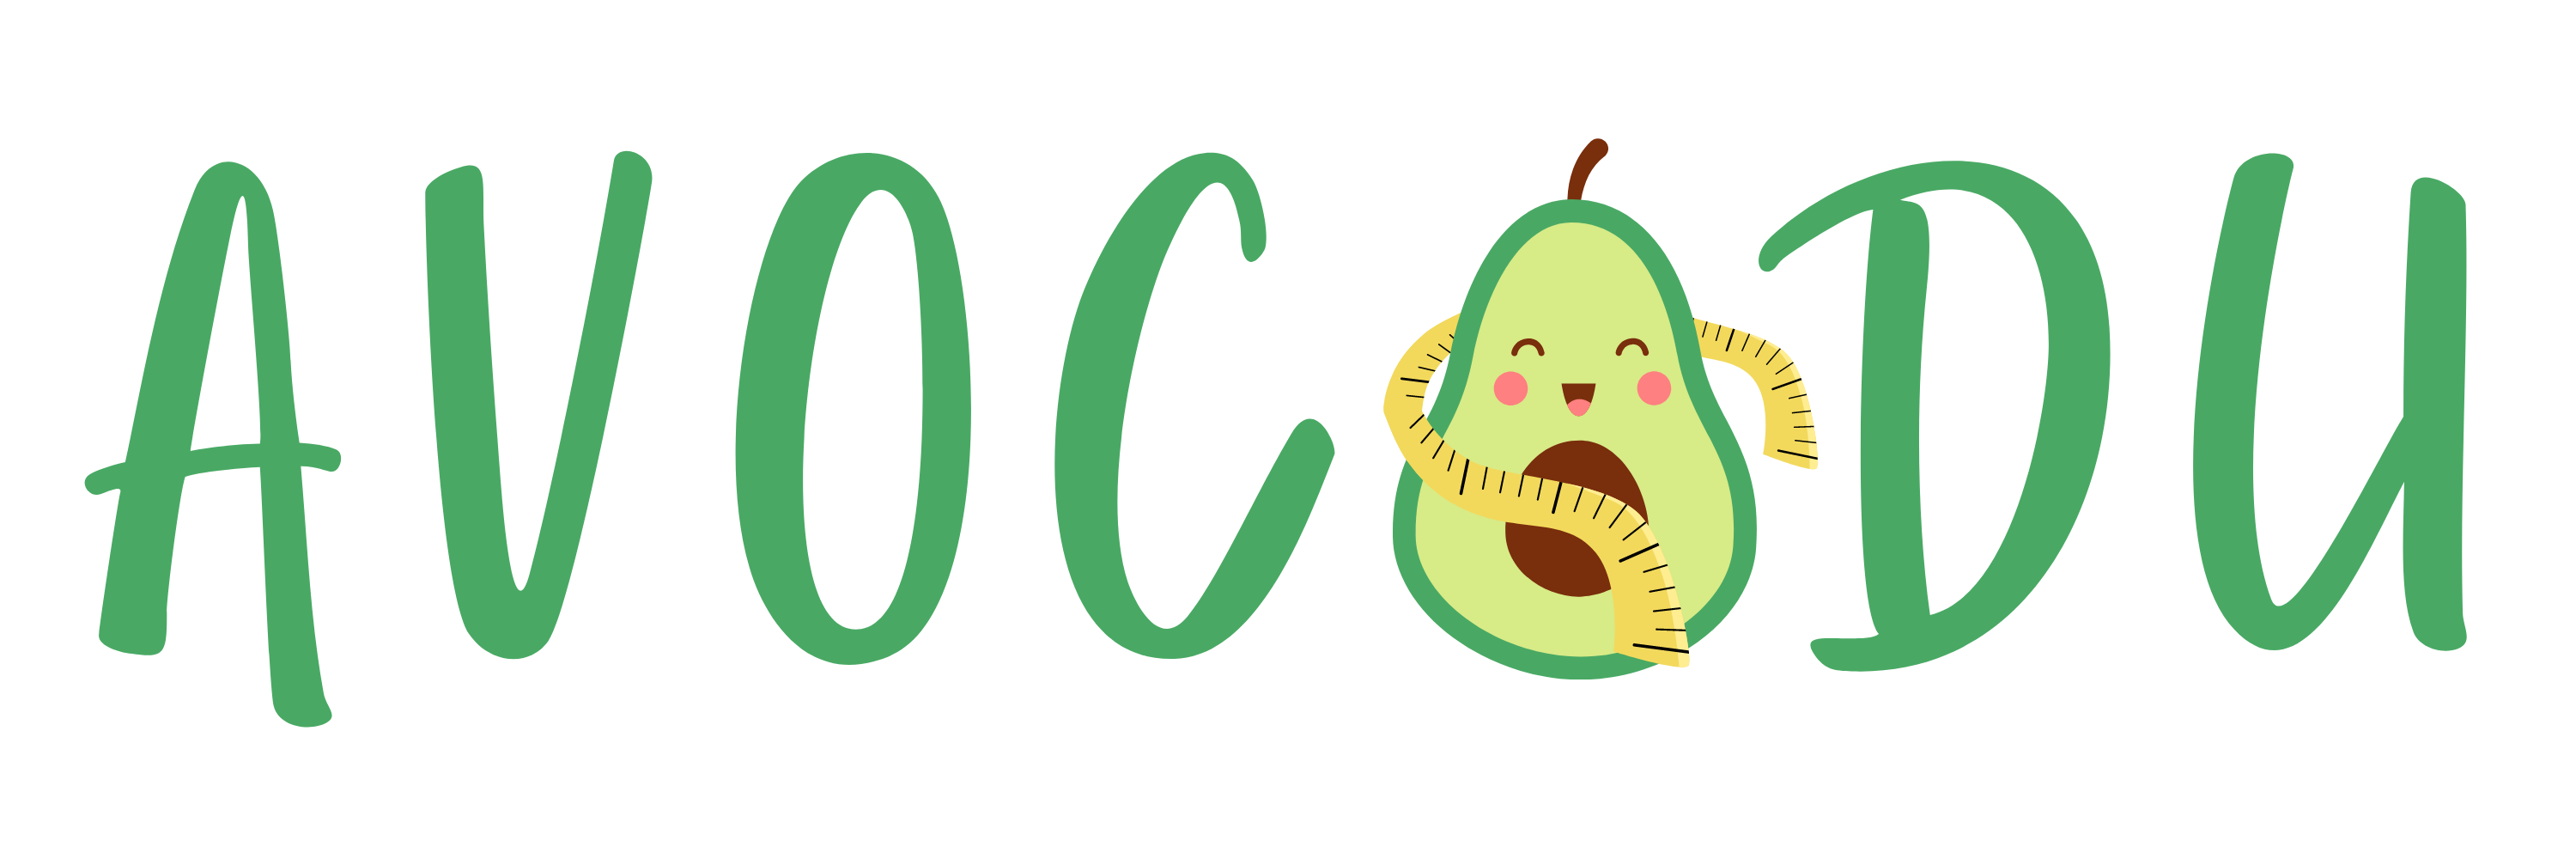 Avocadu